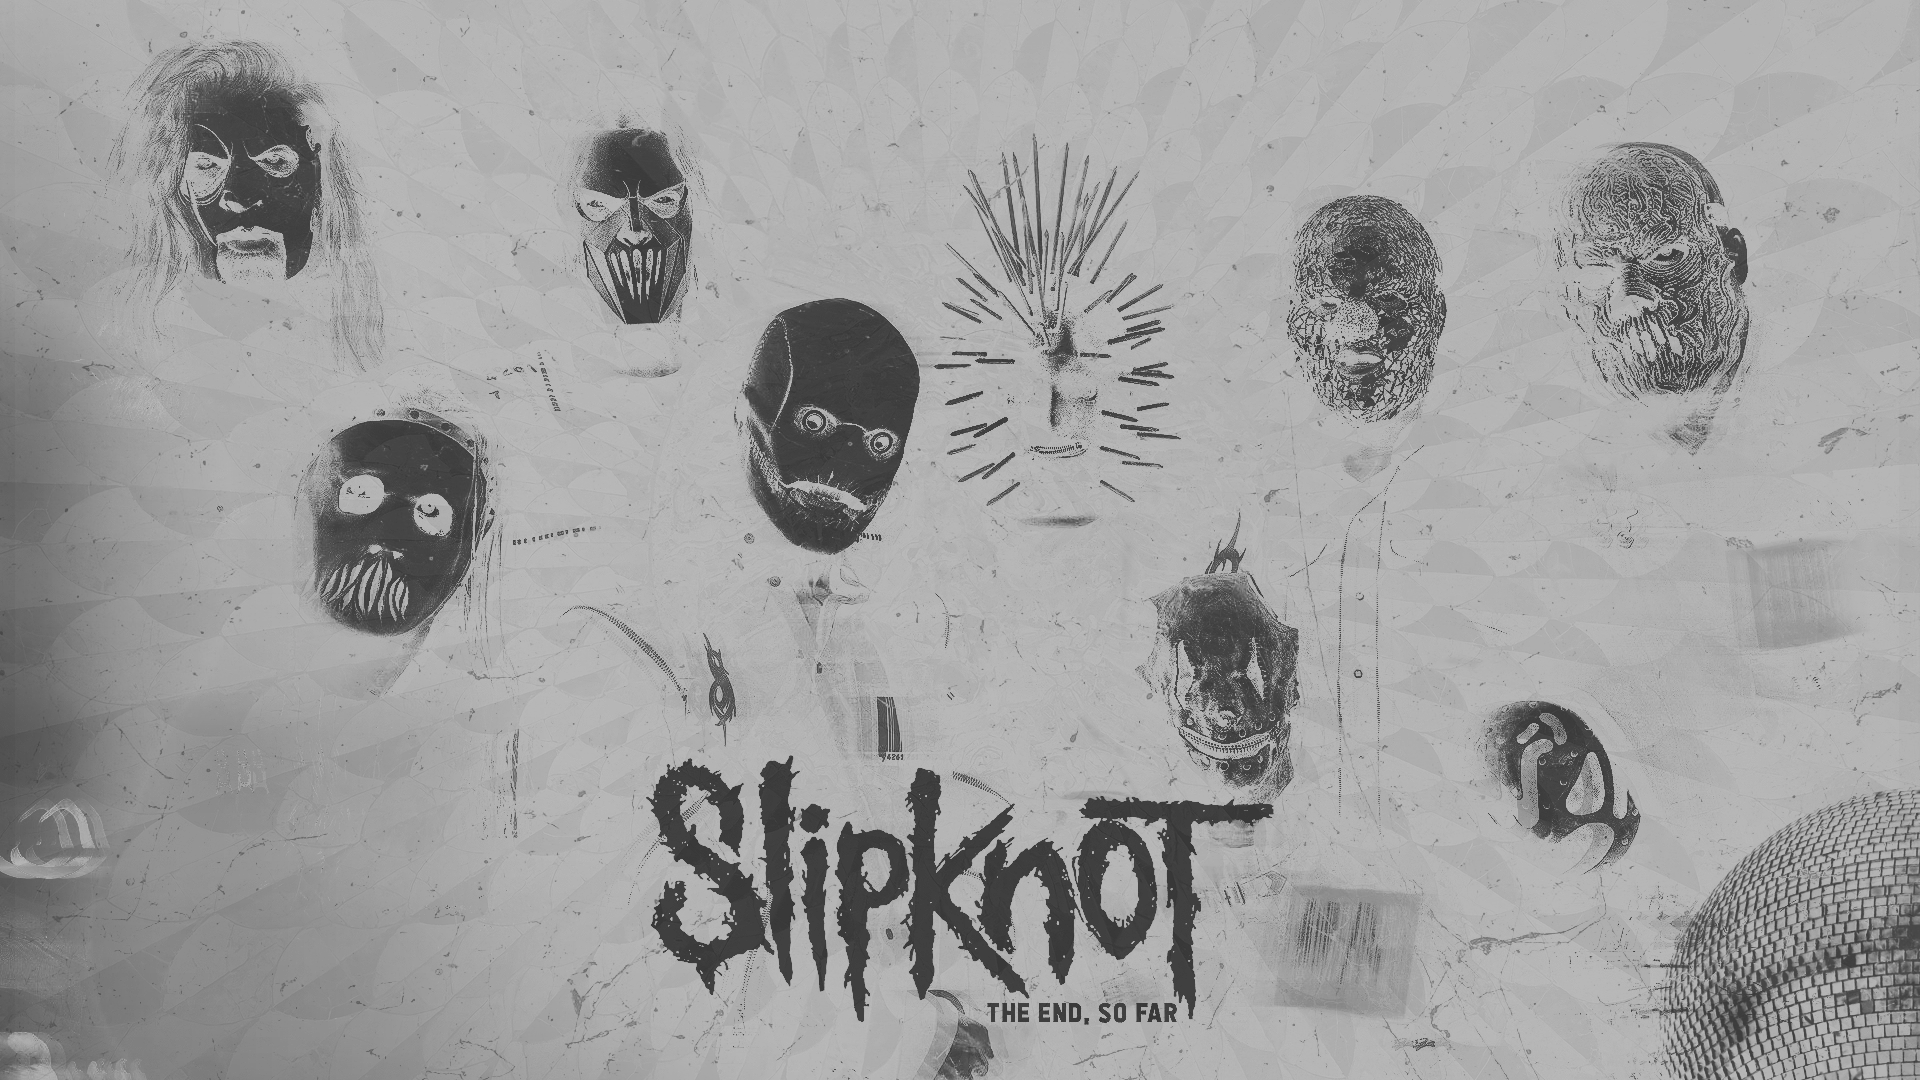 General 1920x1080 Slipknot The End, So Far metal band negative digital art